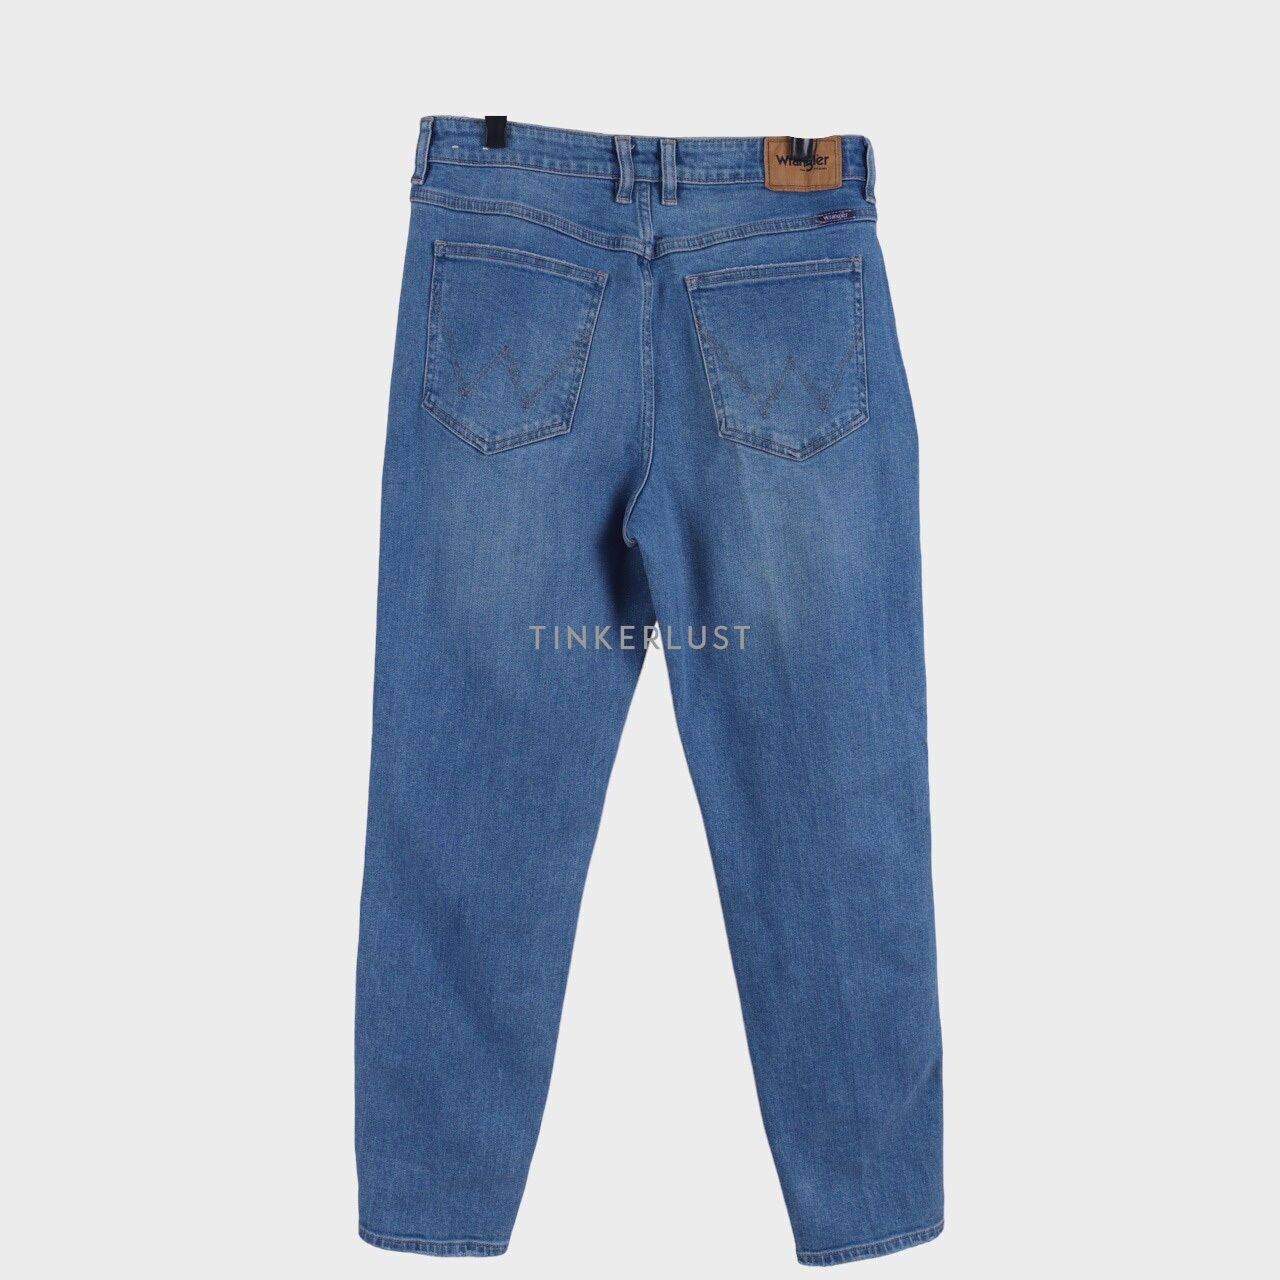 Wrangler Blue Jeans Long Pants